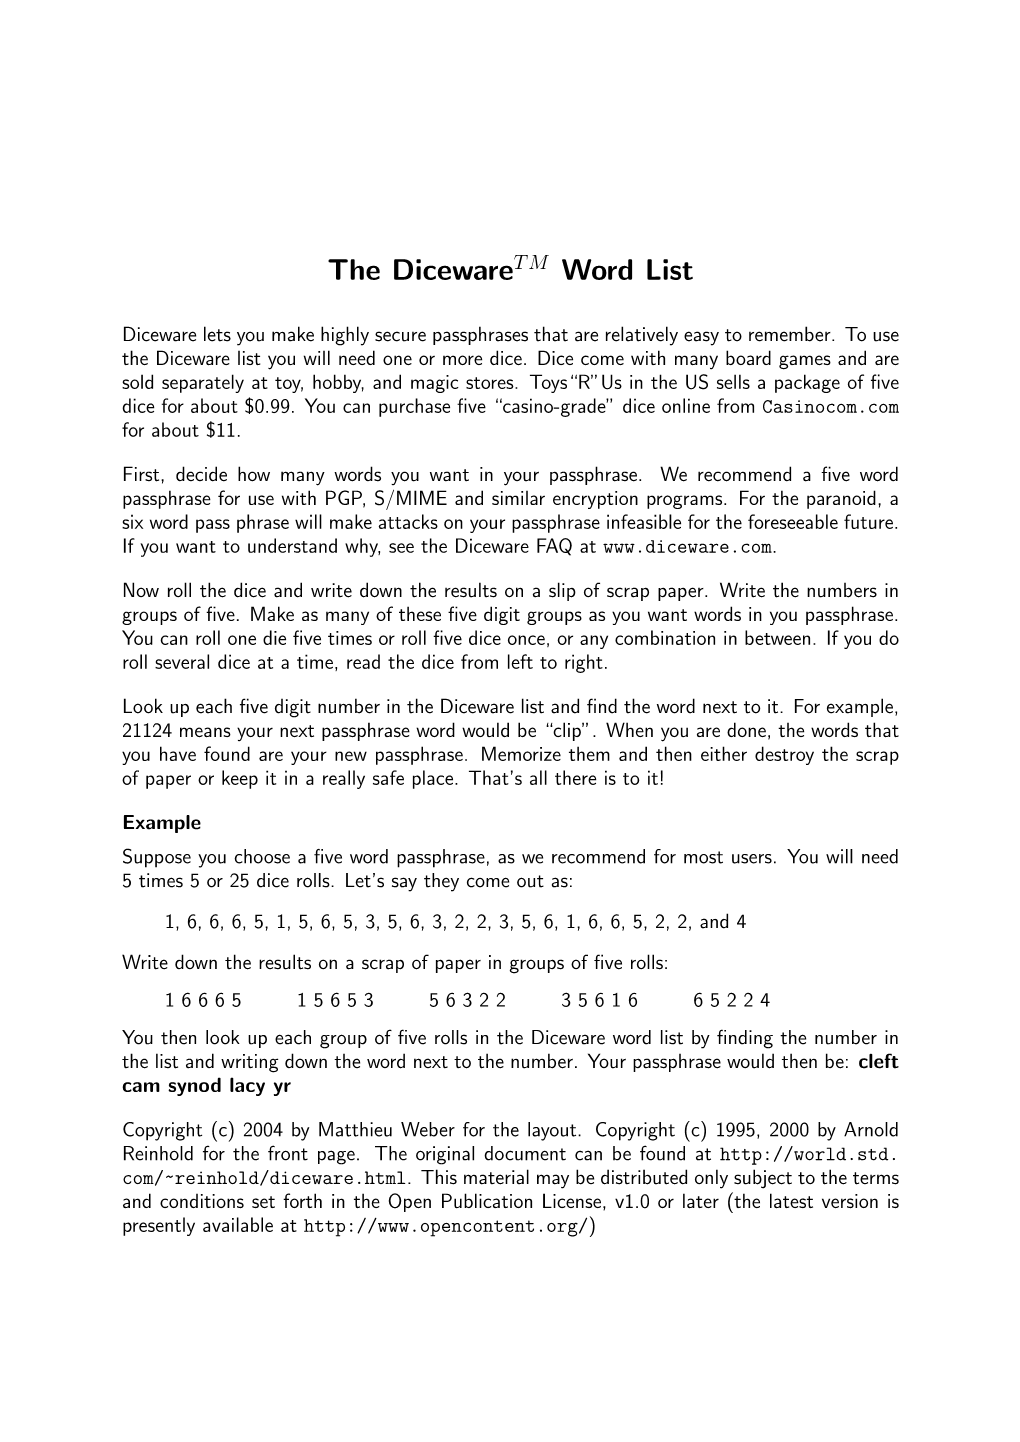 The Dicewaretm Word List